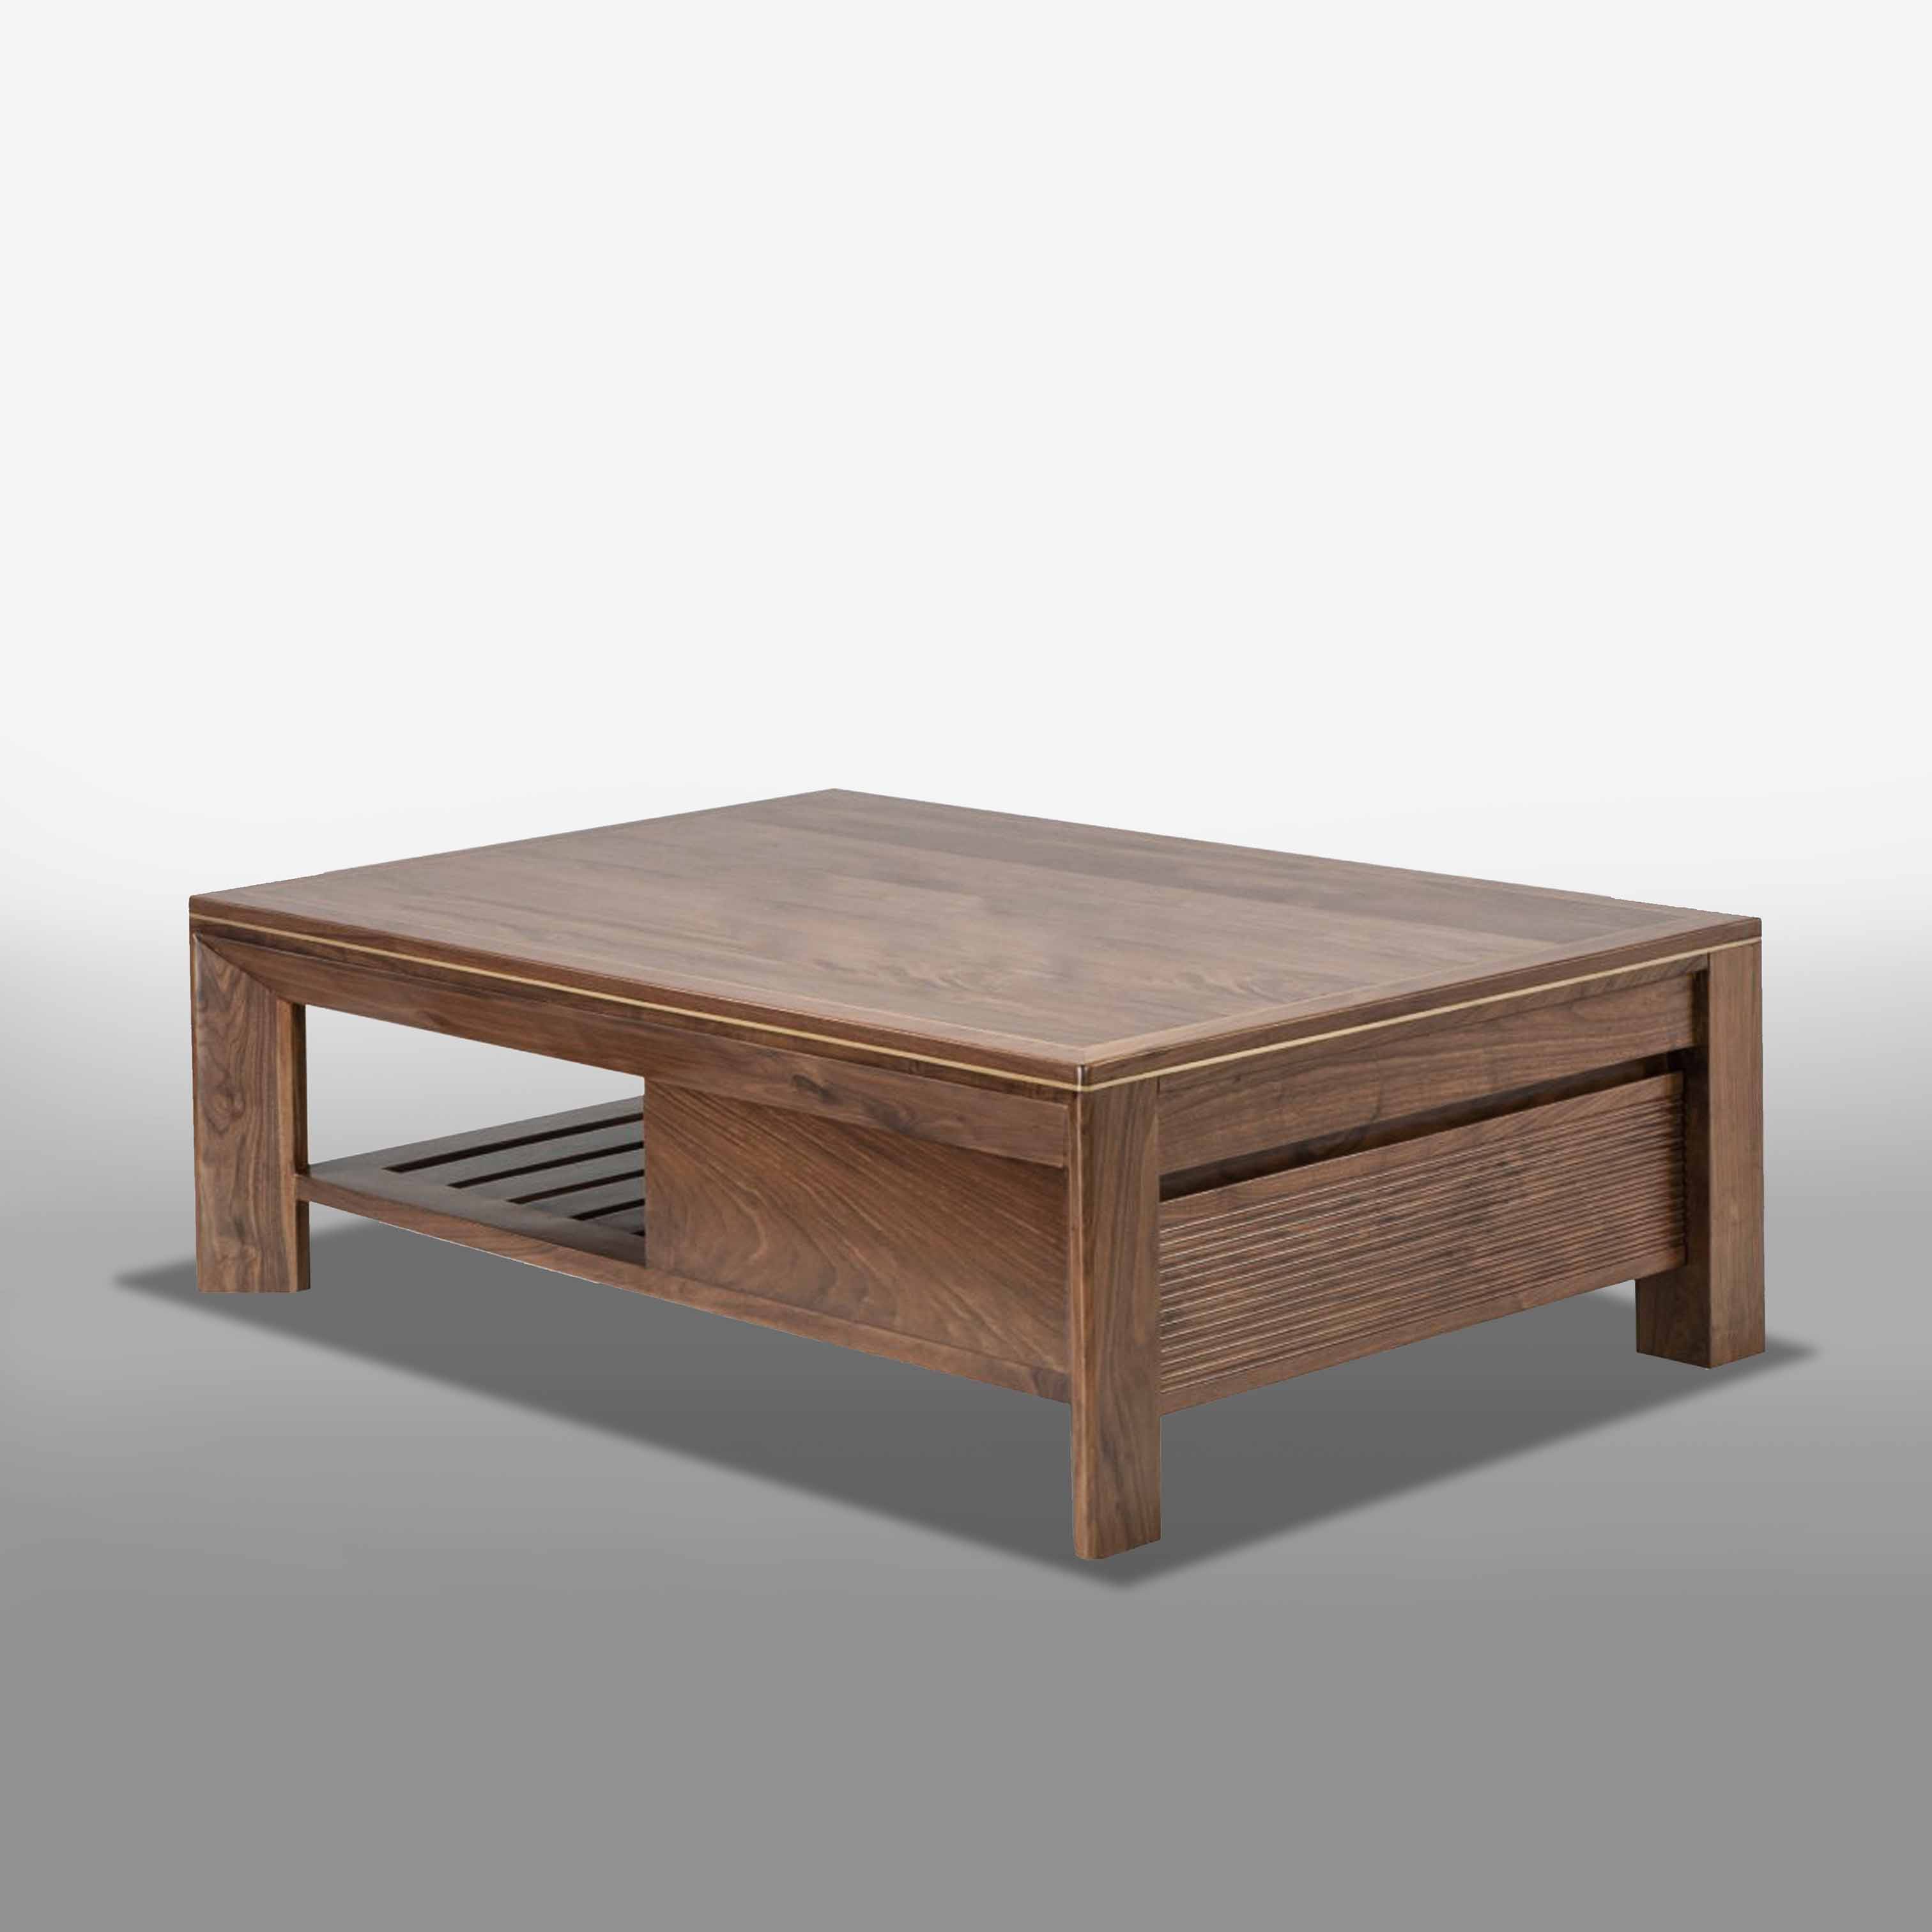 Noble rectangular wooden table - B55LHFU